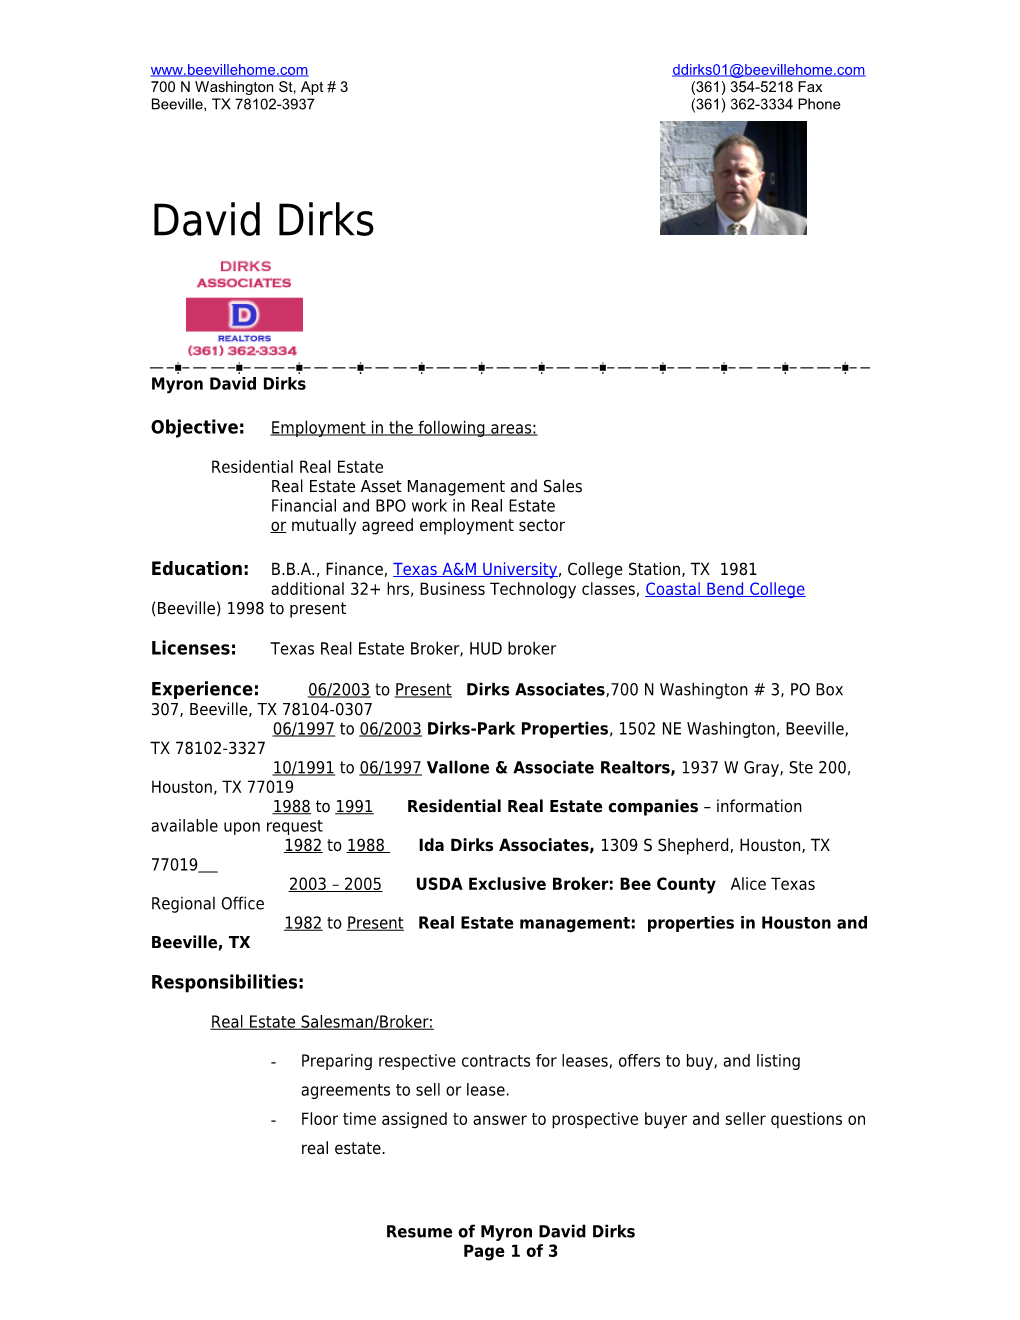 Resume of Myron David Dirks